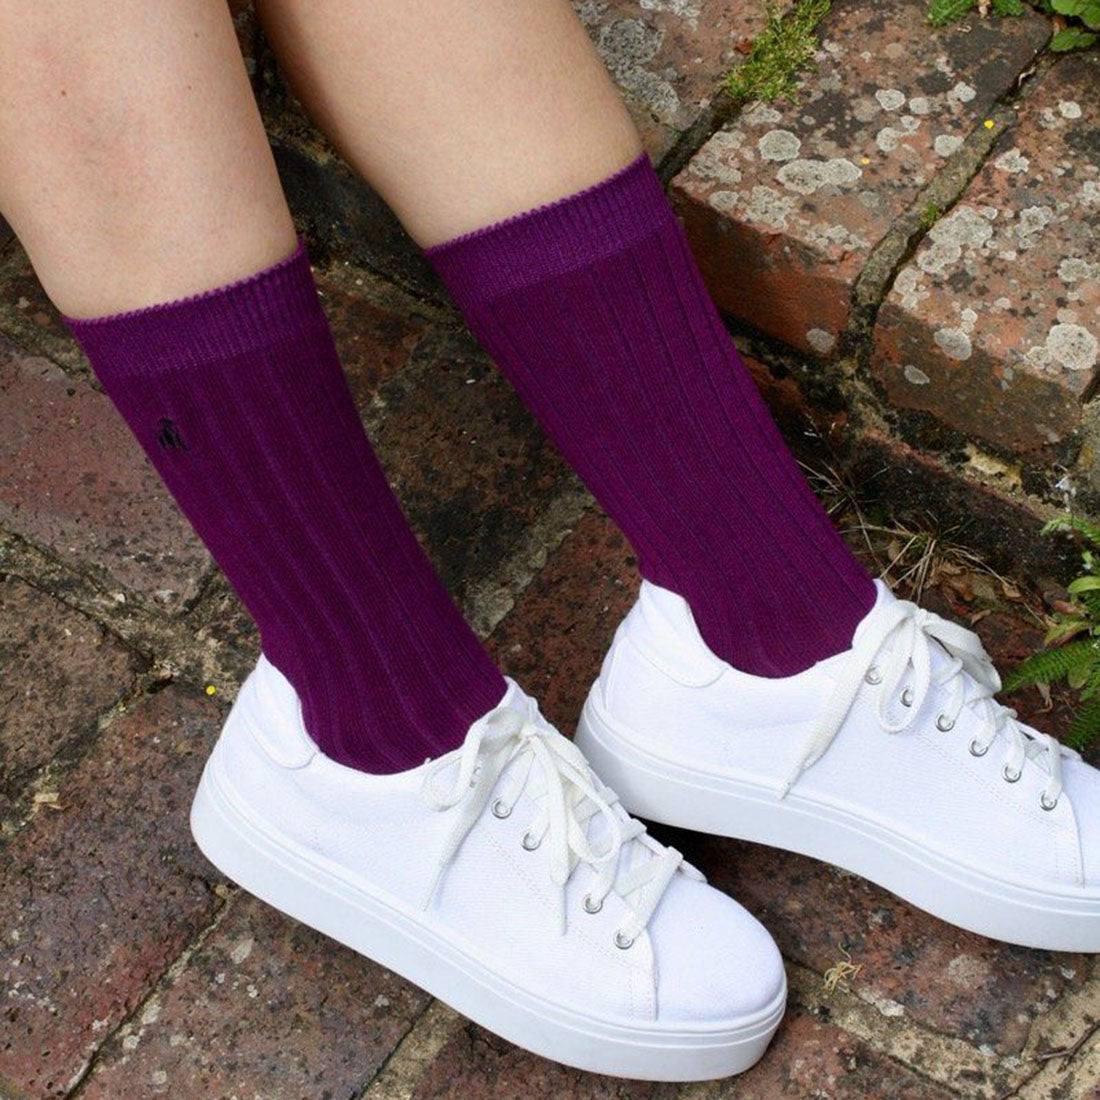 socks-purple-bamboo-socks-2.jpg